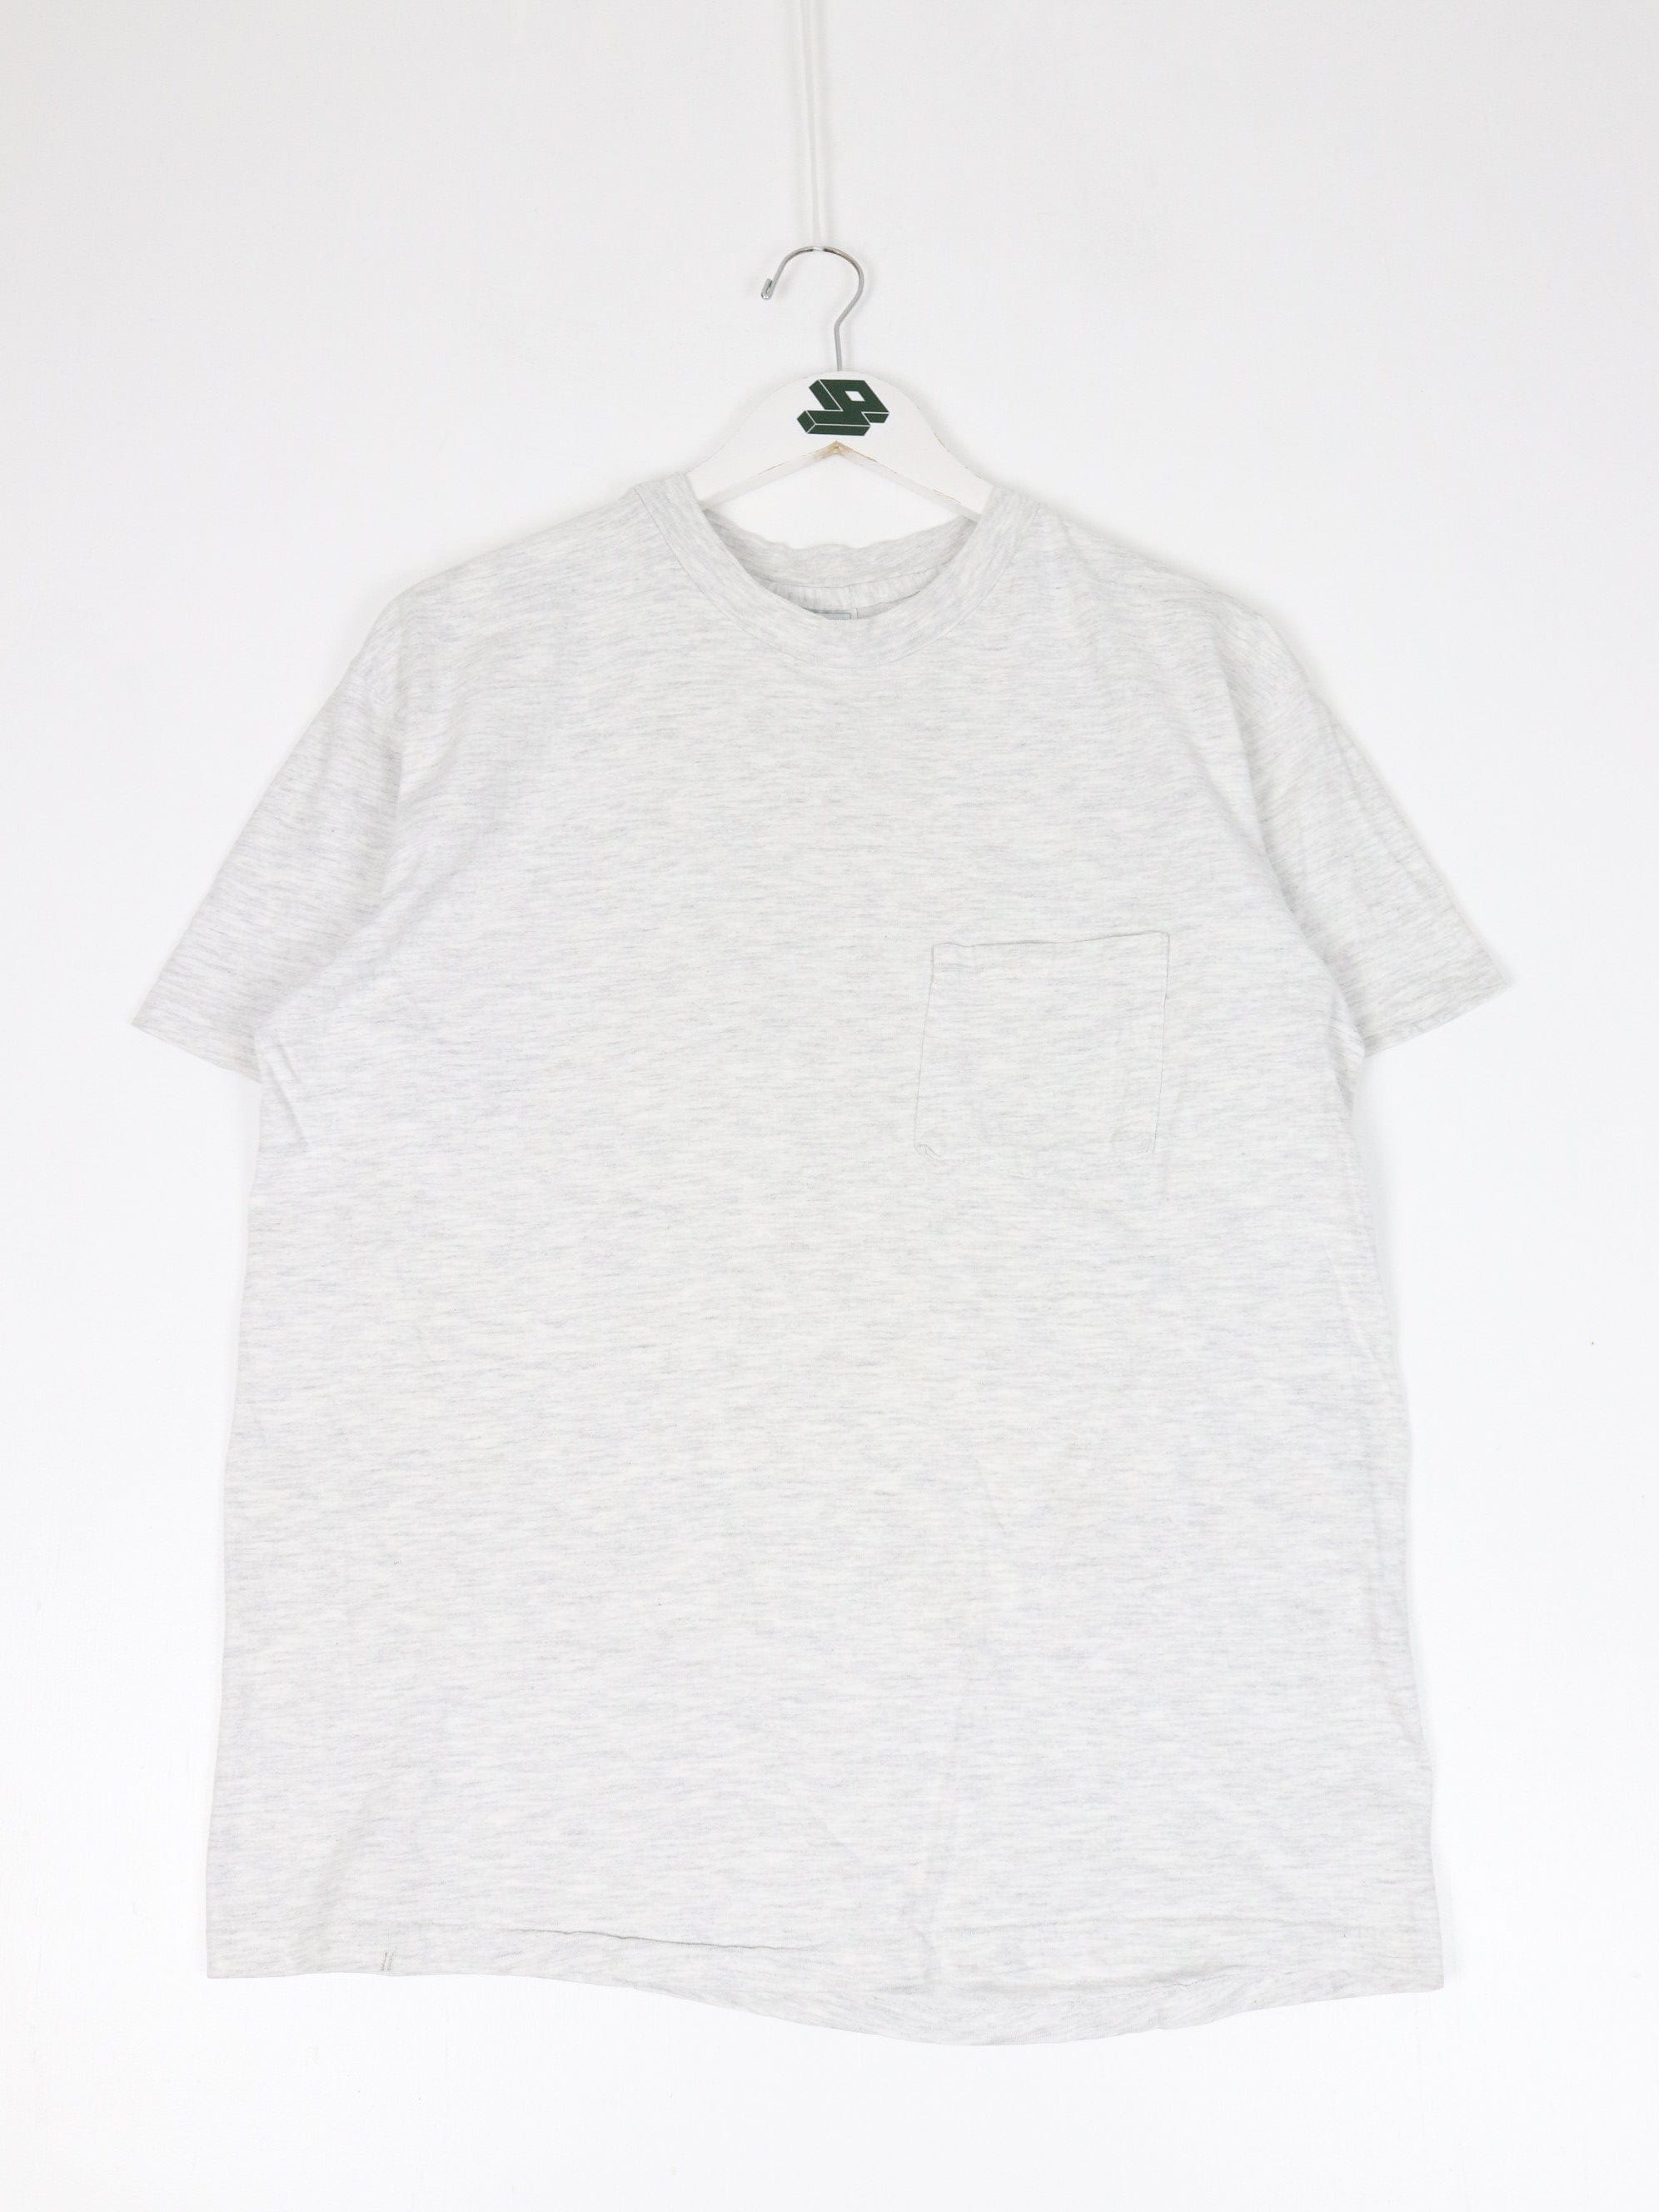 Vintage Hanes Beefy T Shirt Mens large Grey Pocket Blank 90s